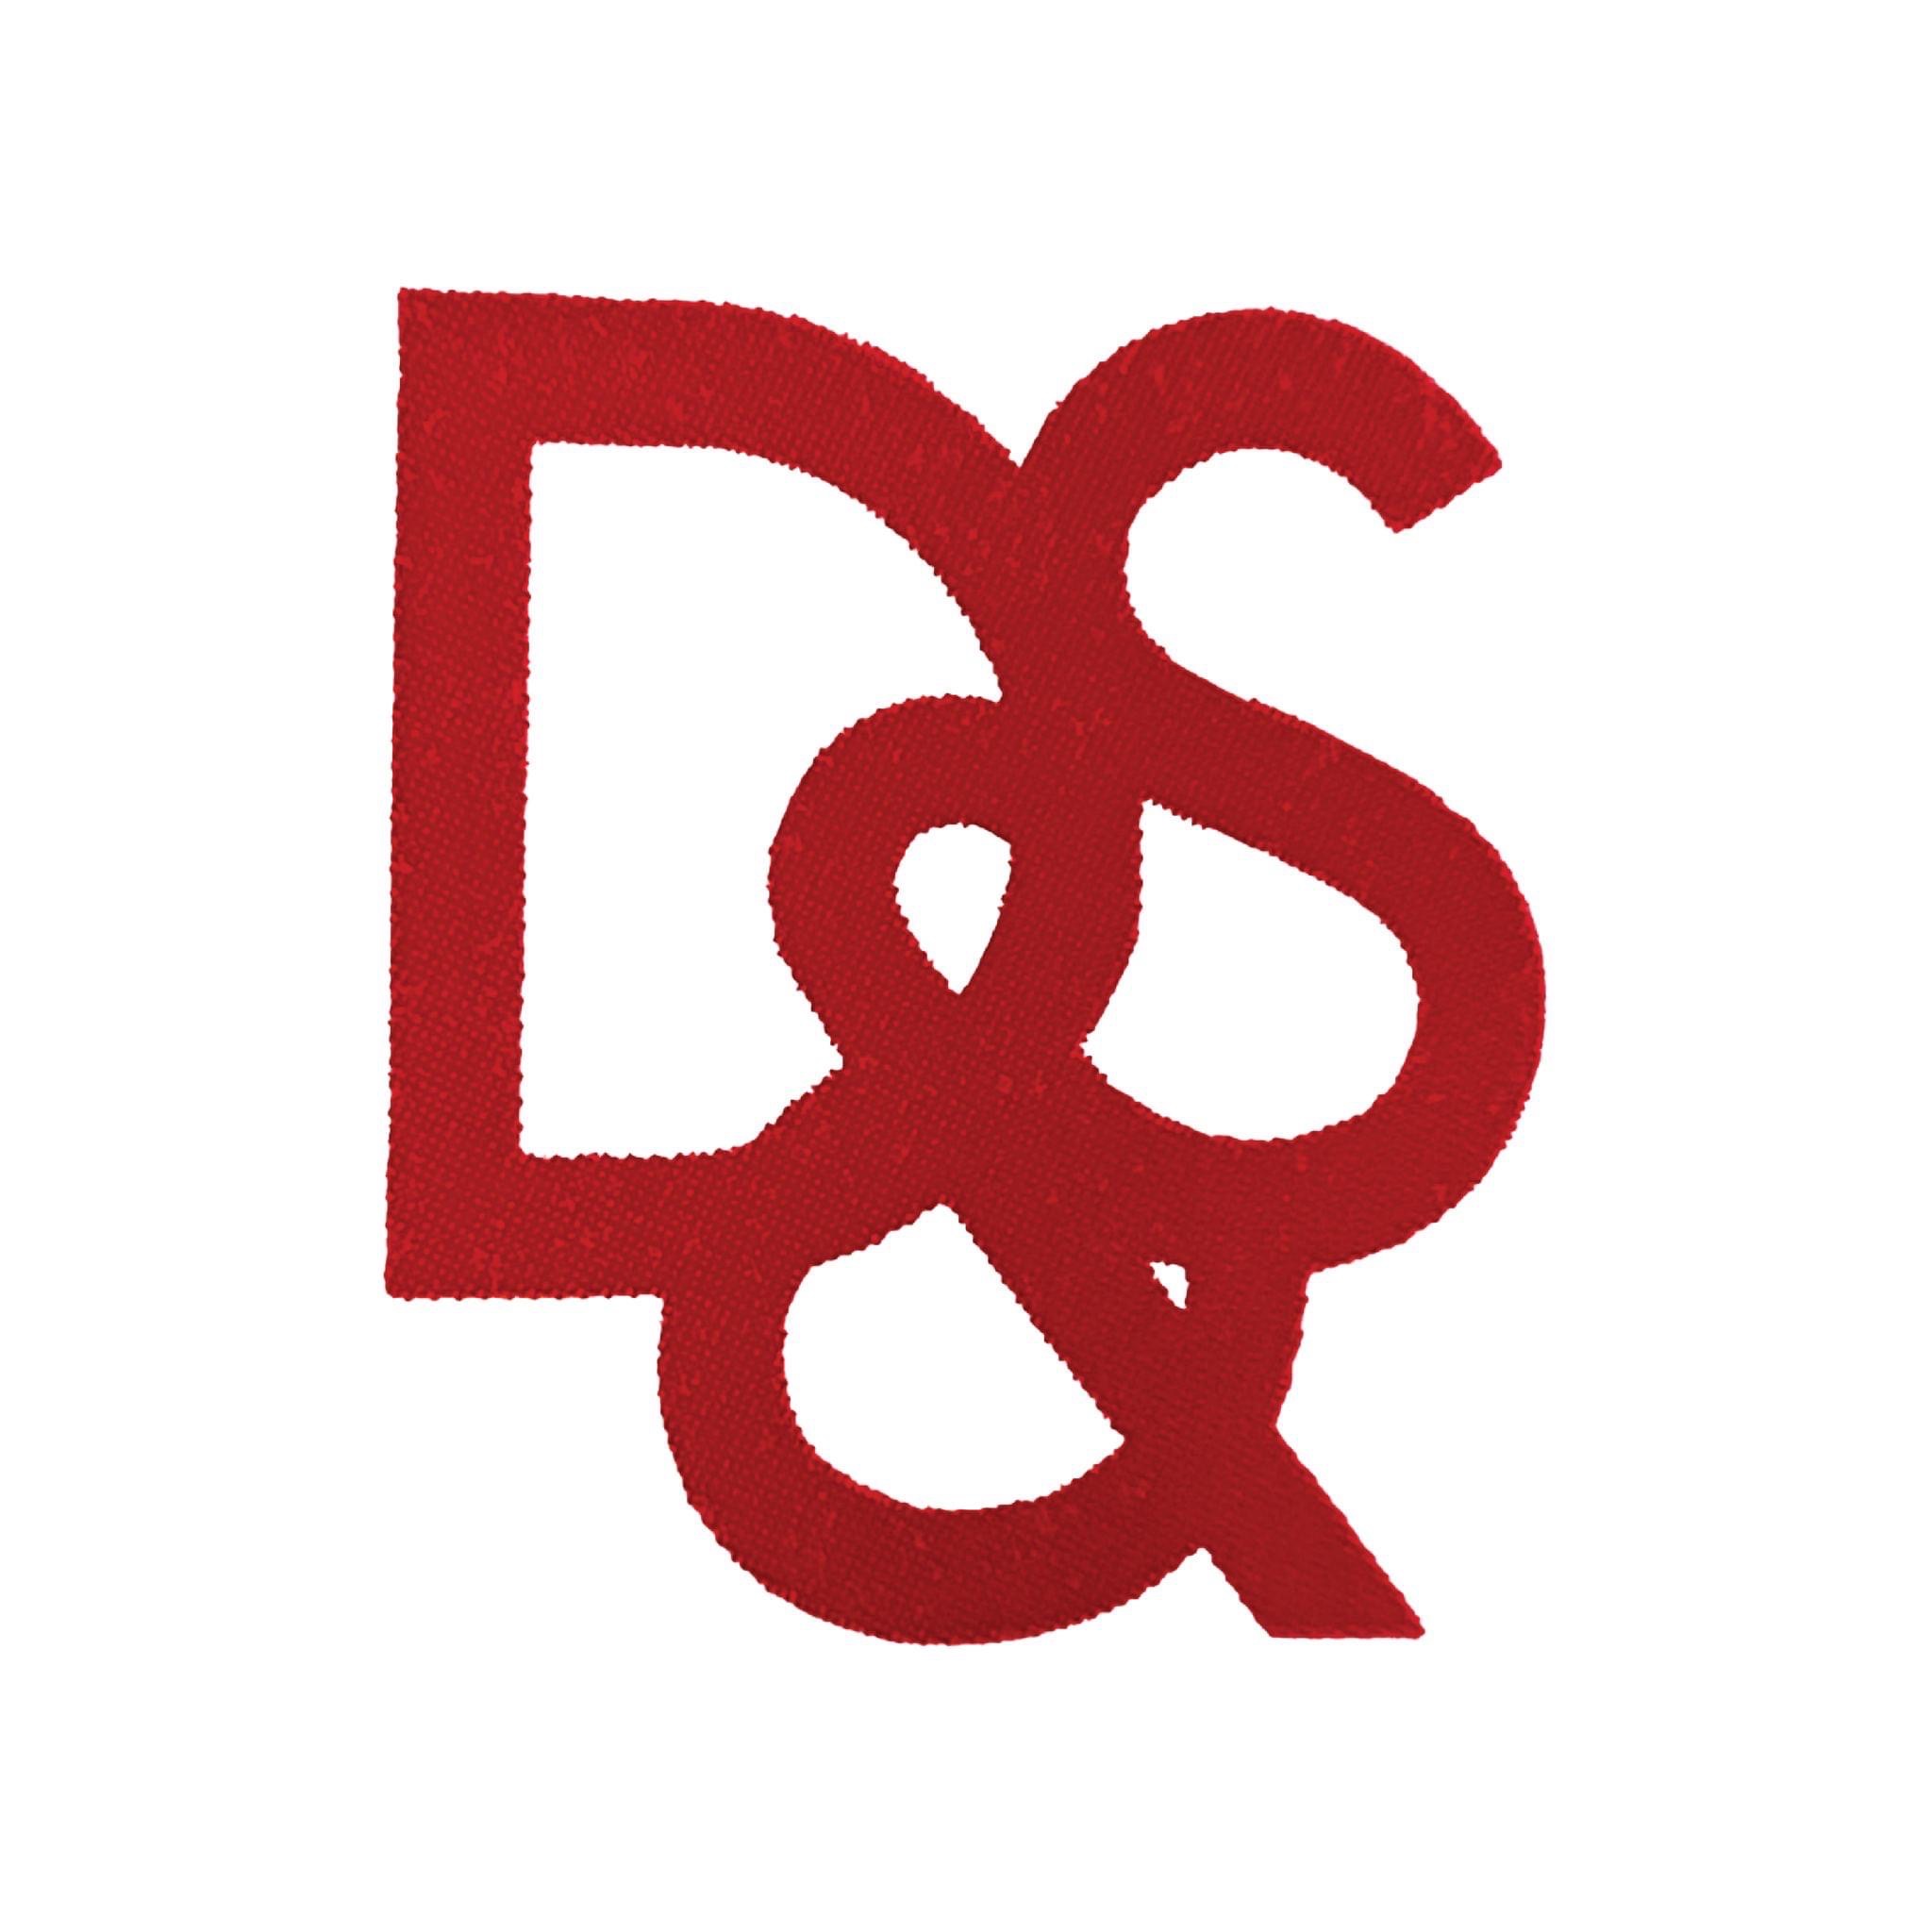 DeWitt & Sons General Contracting, LLC Logo